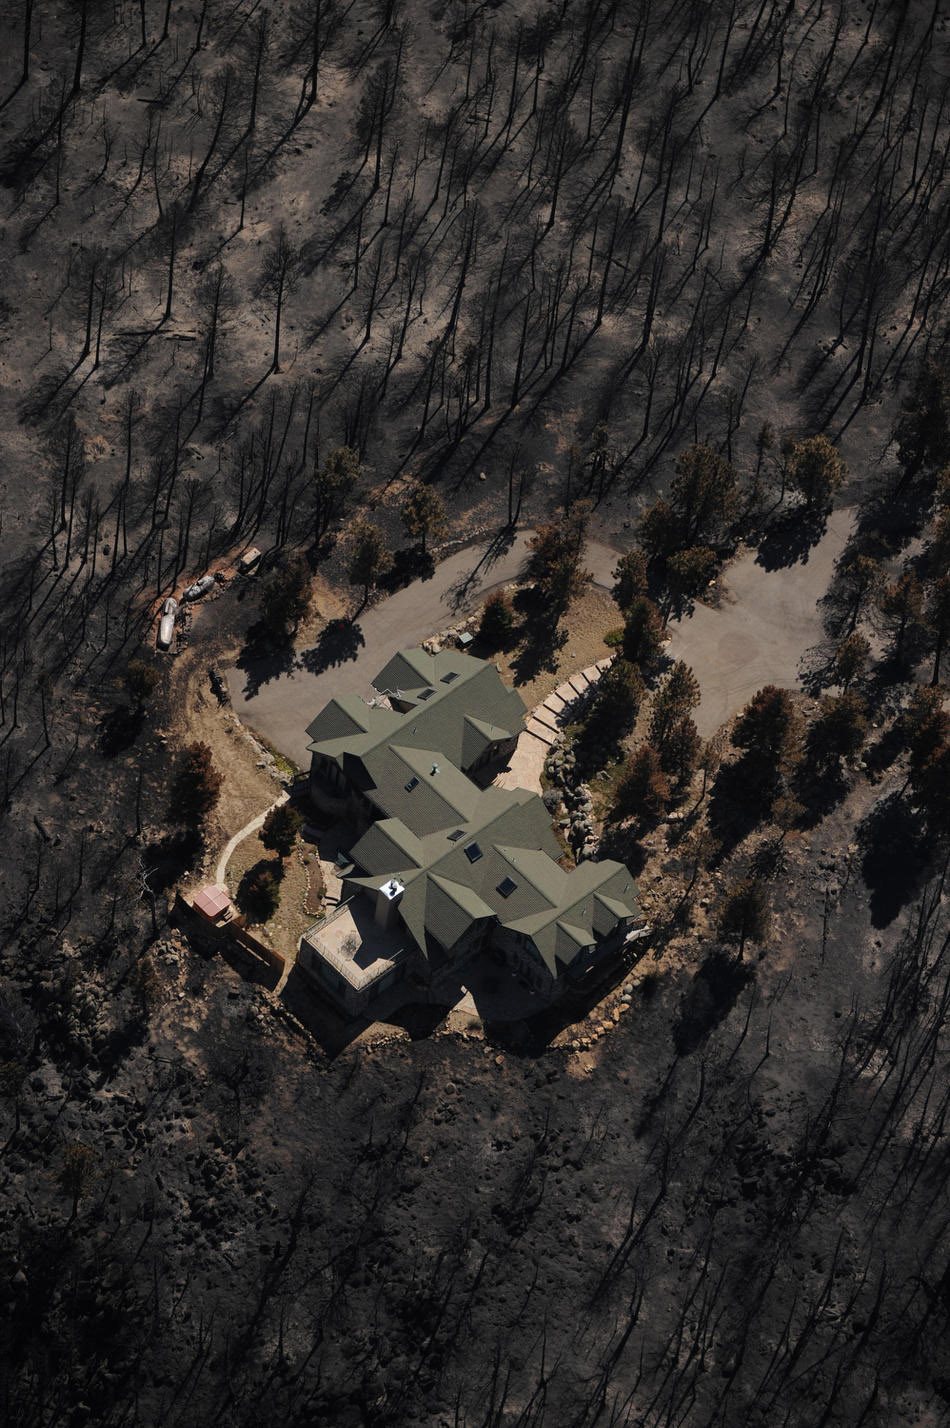 Последствия лесного пожара в каньоне Фомайл